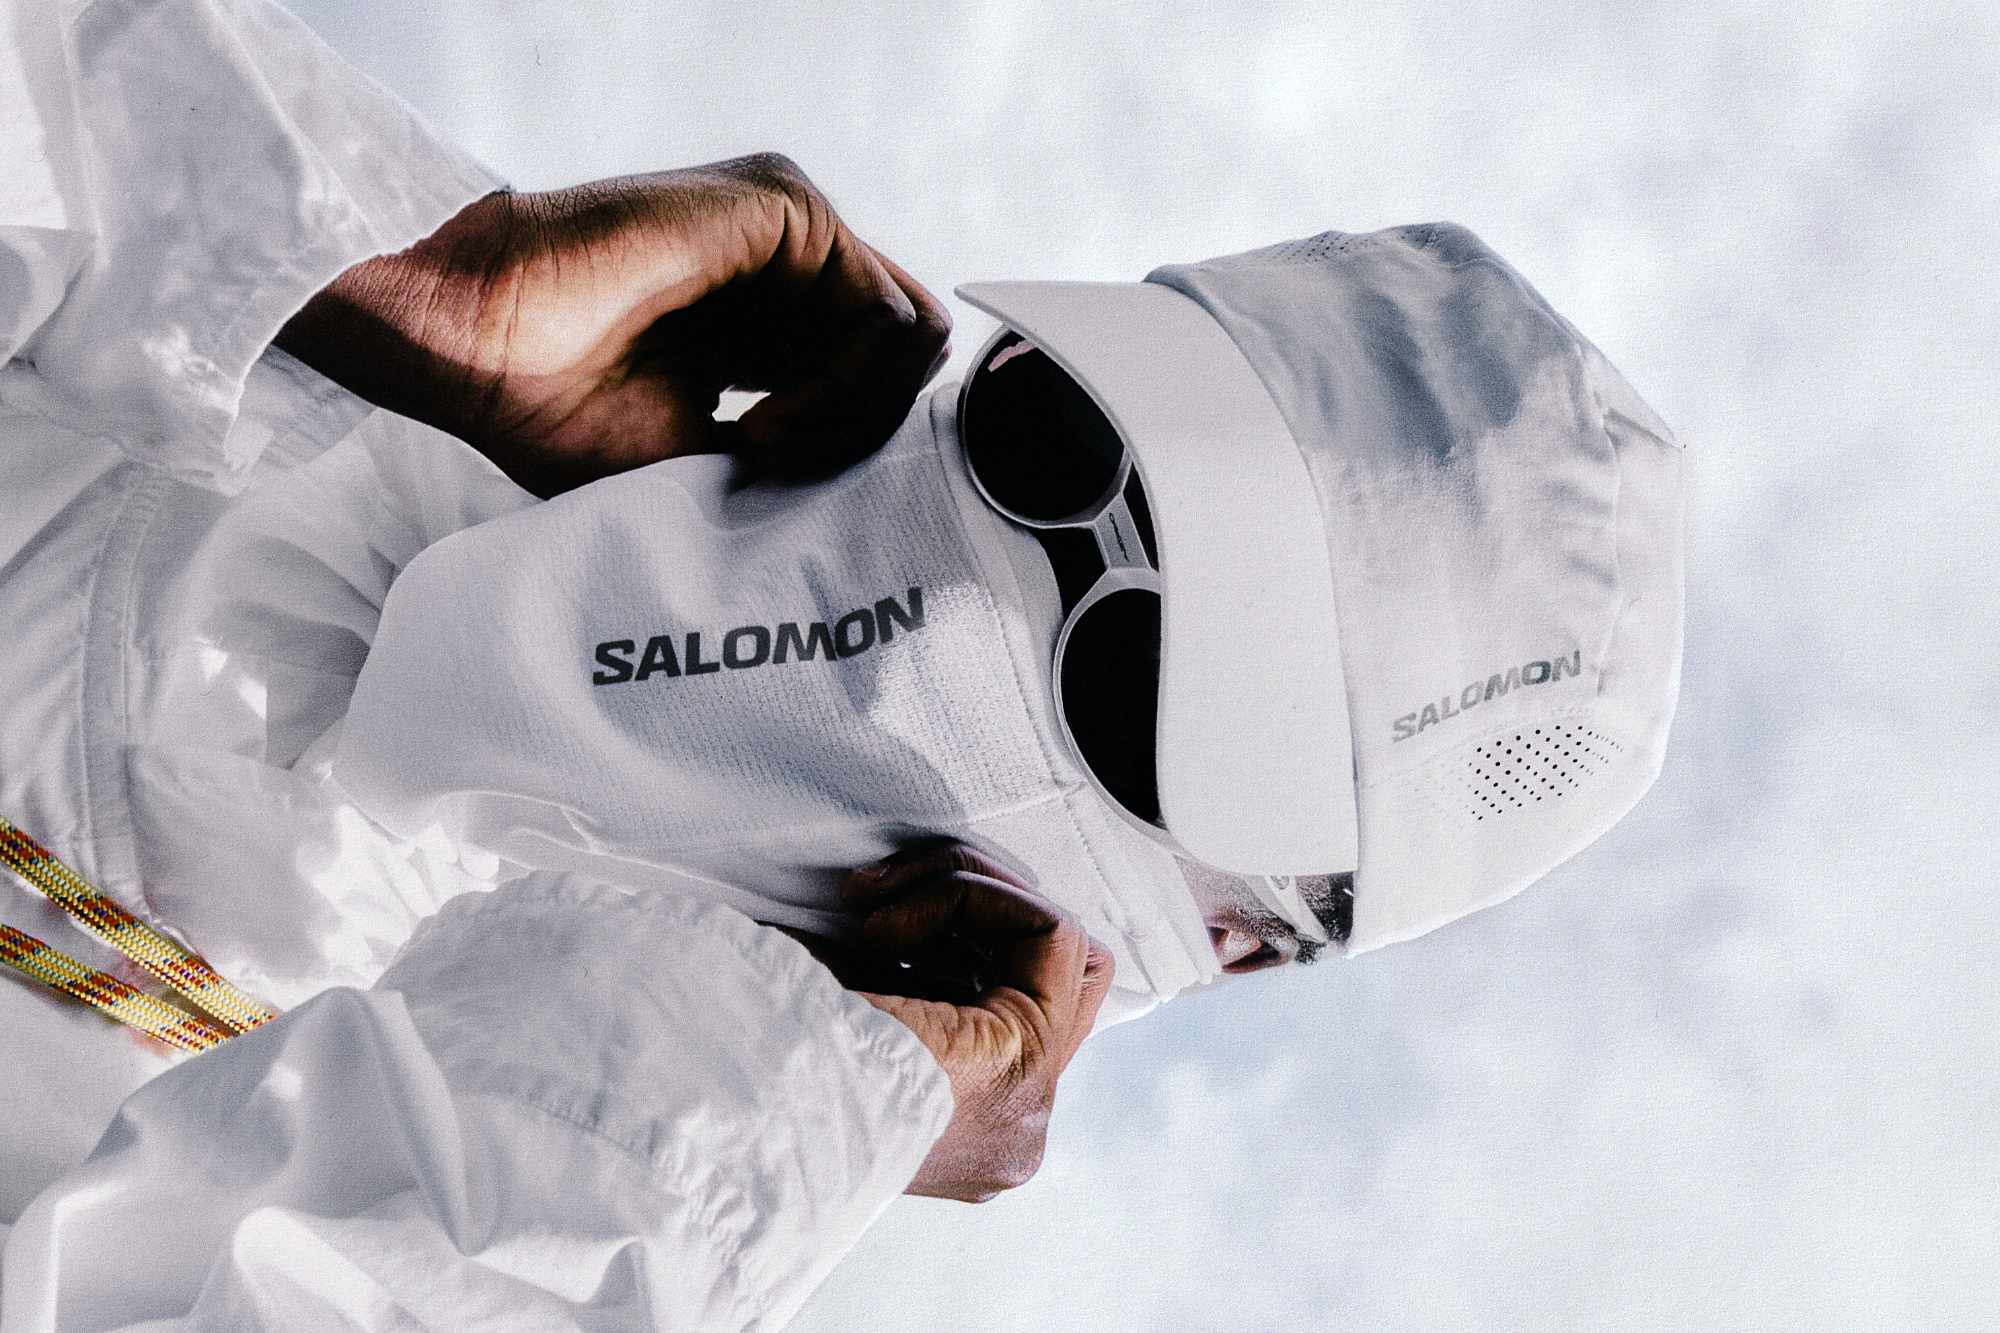 Salomon's white jacket & hat worn by a model